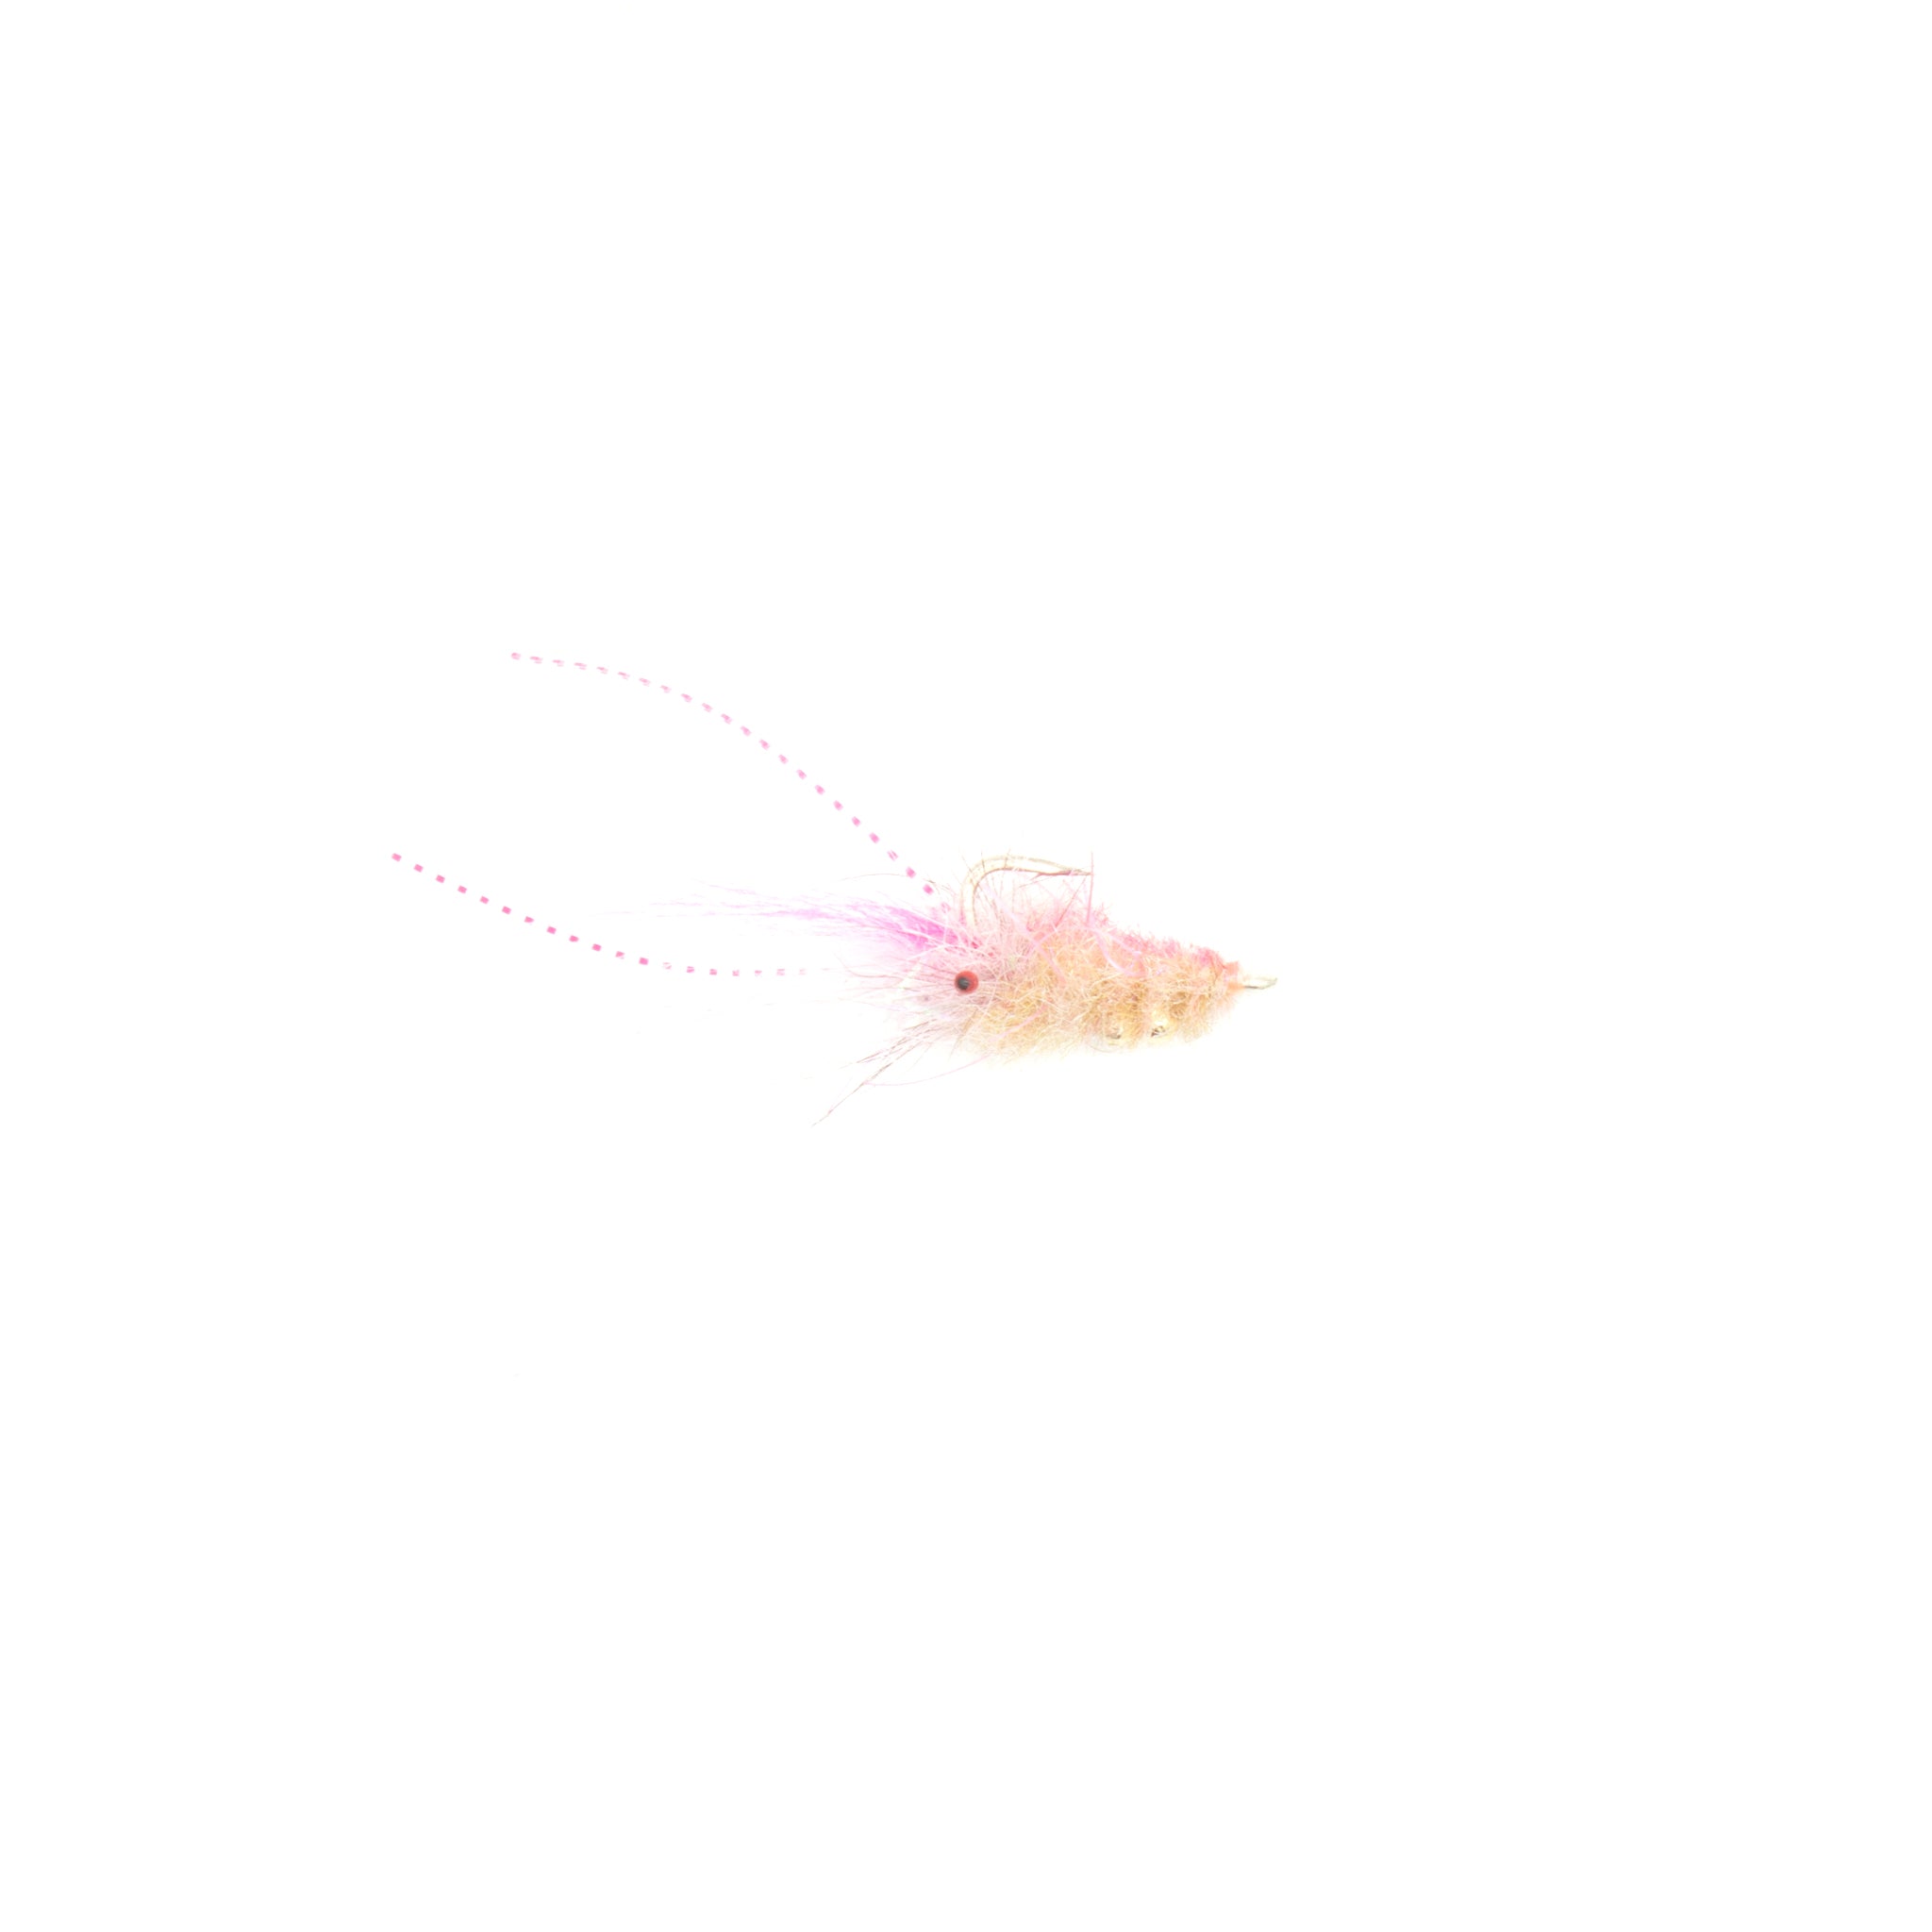 Chewy's Cyborg Shrimp